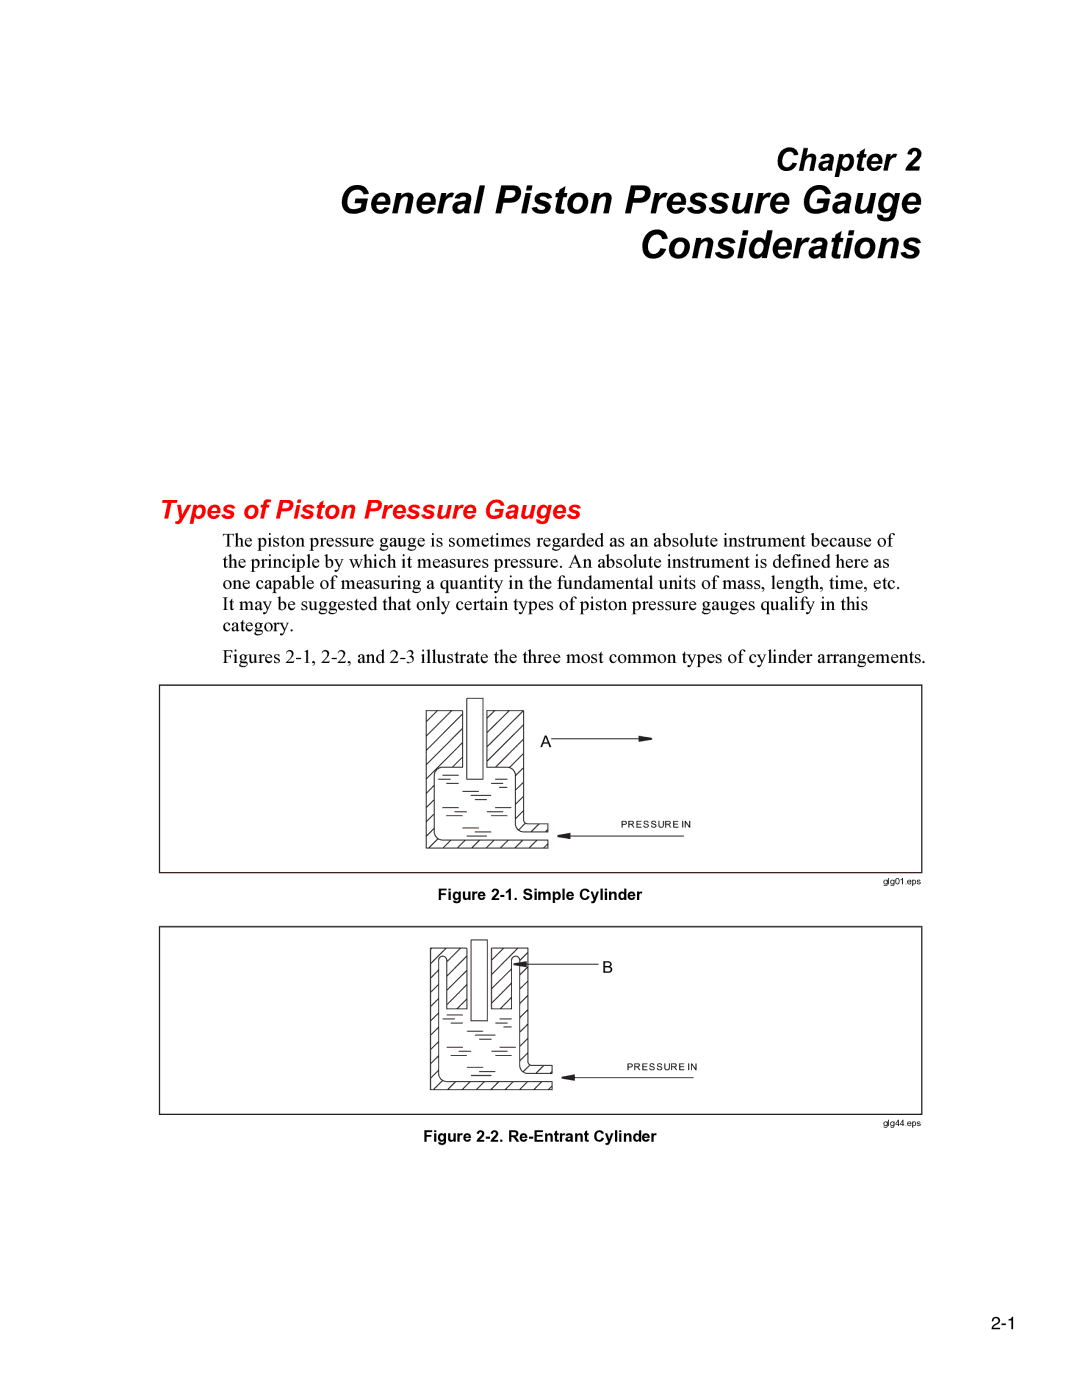 Fluke 2470 specifications General Piston Pressure Gauge Considerations, Types of Piston Pressure Gauges 